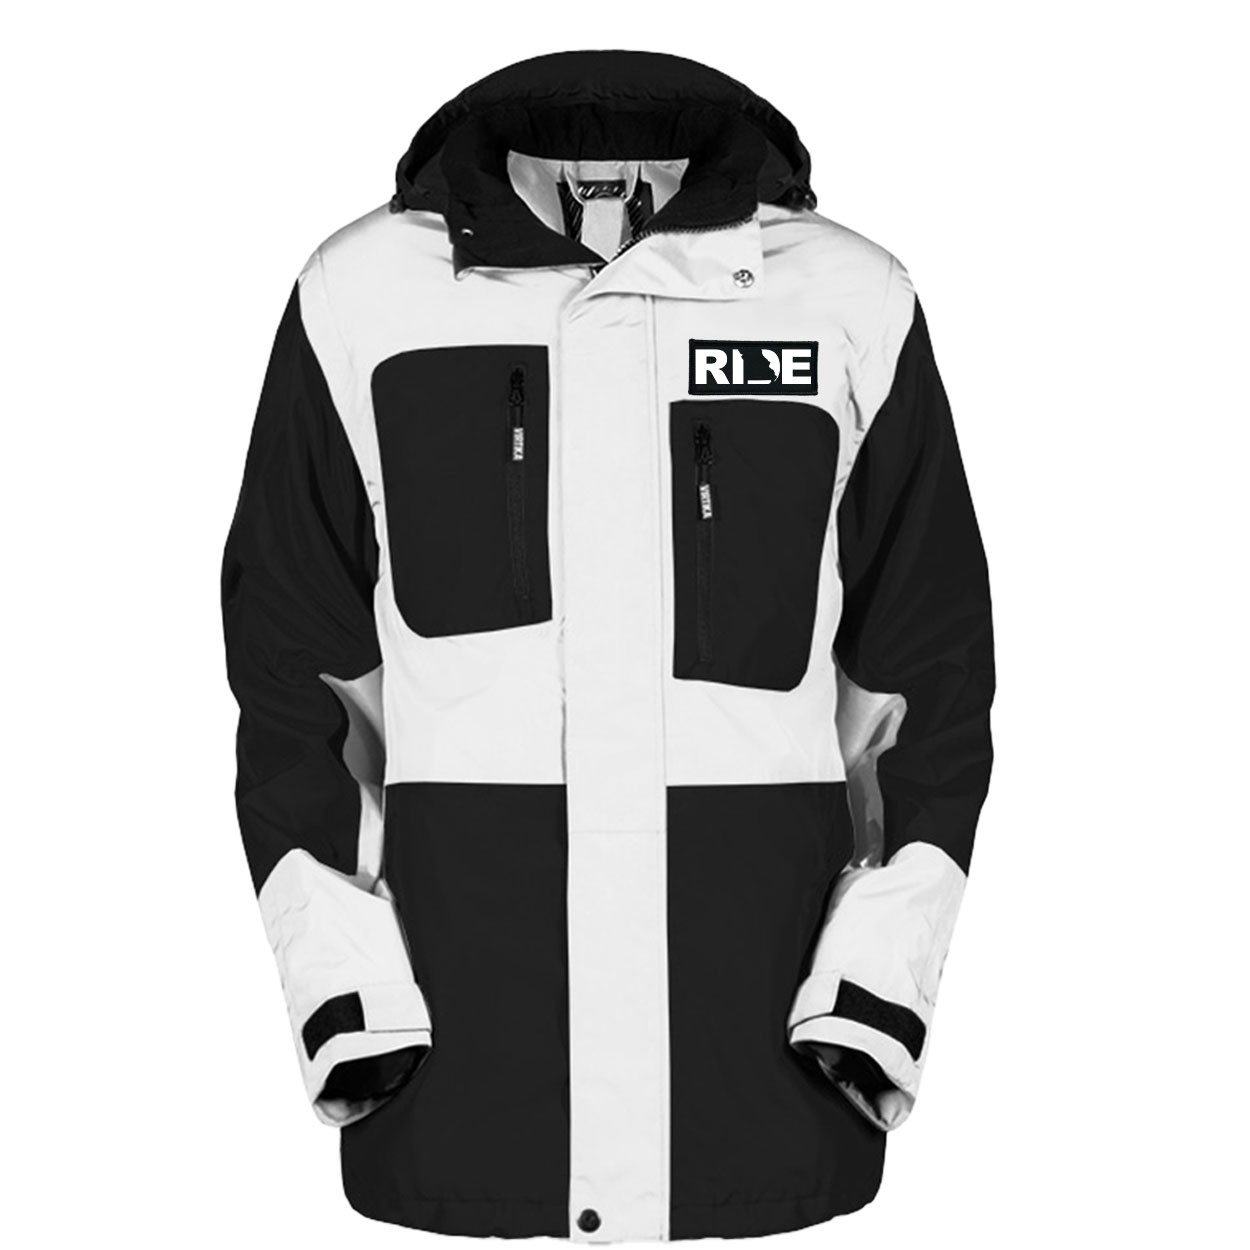 Ride Missouri Pro Waterproof Breathable Winter Virtika Jacket Black/White (White Logo)